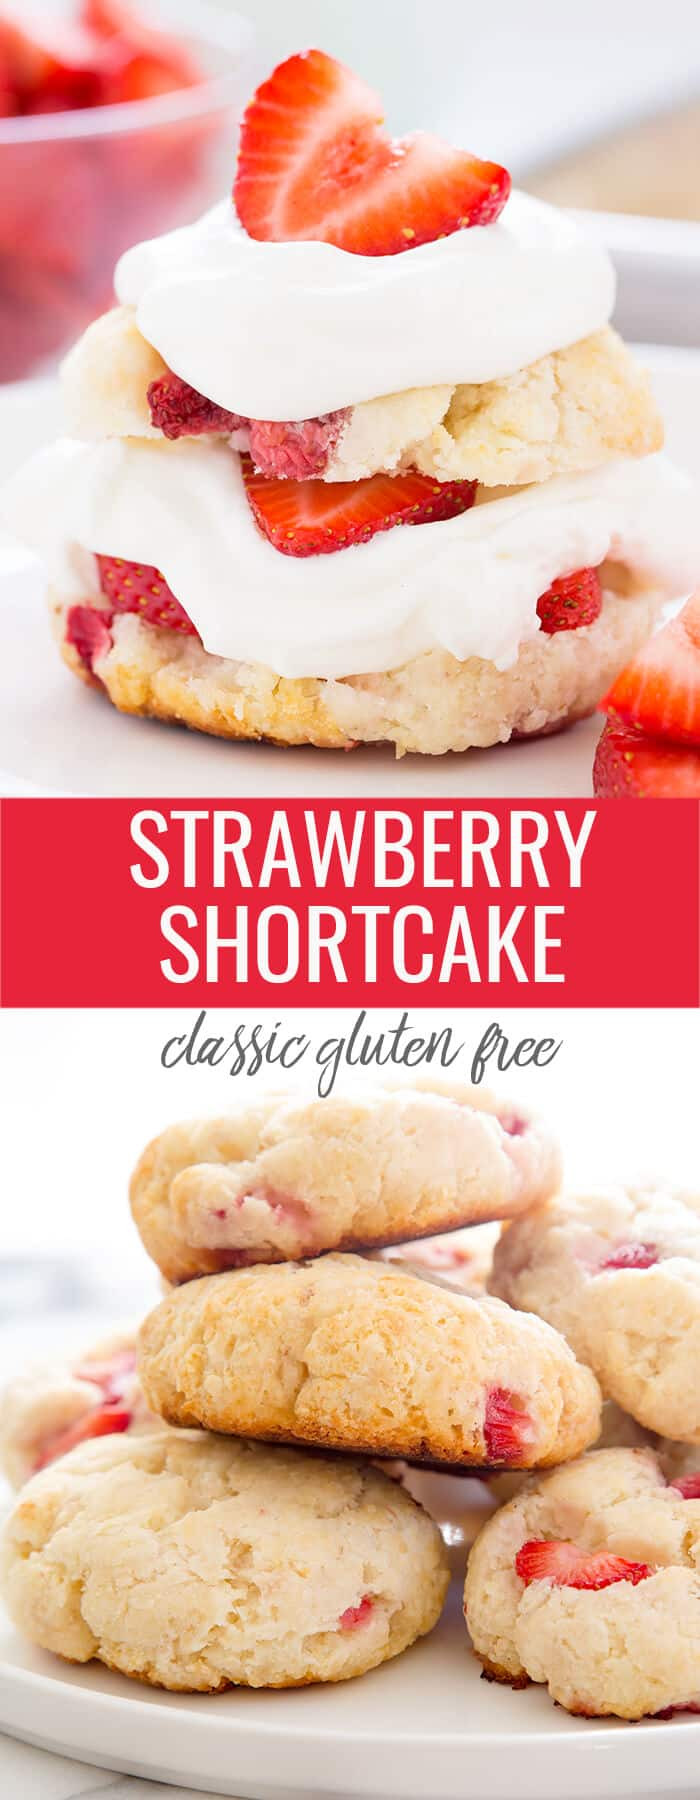 Gluten Free Shortcake Recipe
 Gluten Free Strawberry Shortcake ⋆ Great gluten free